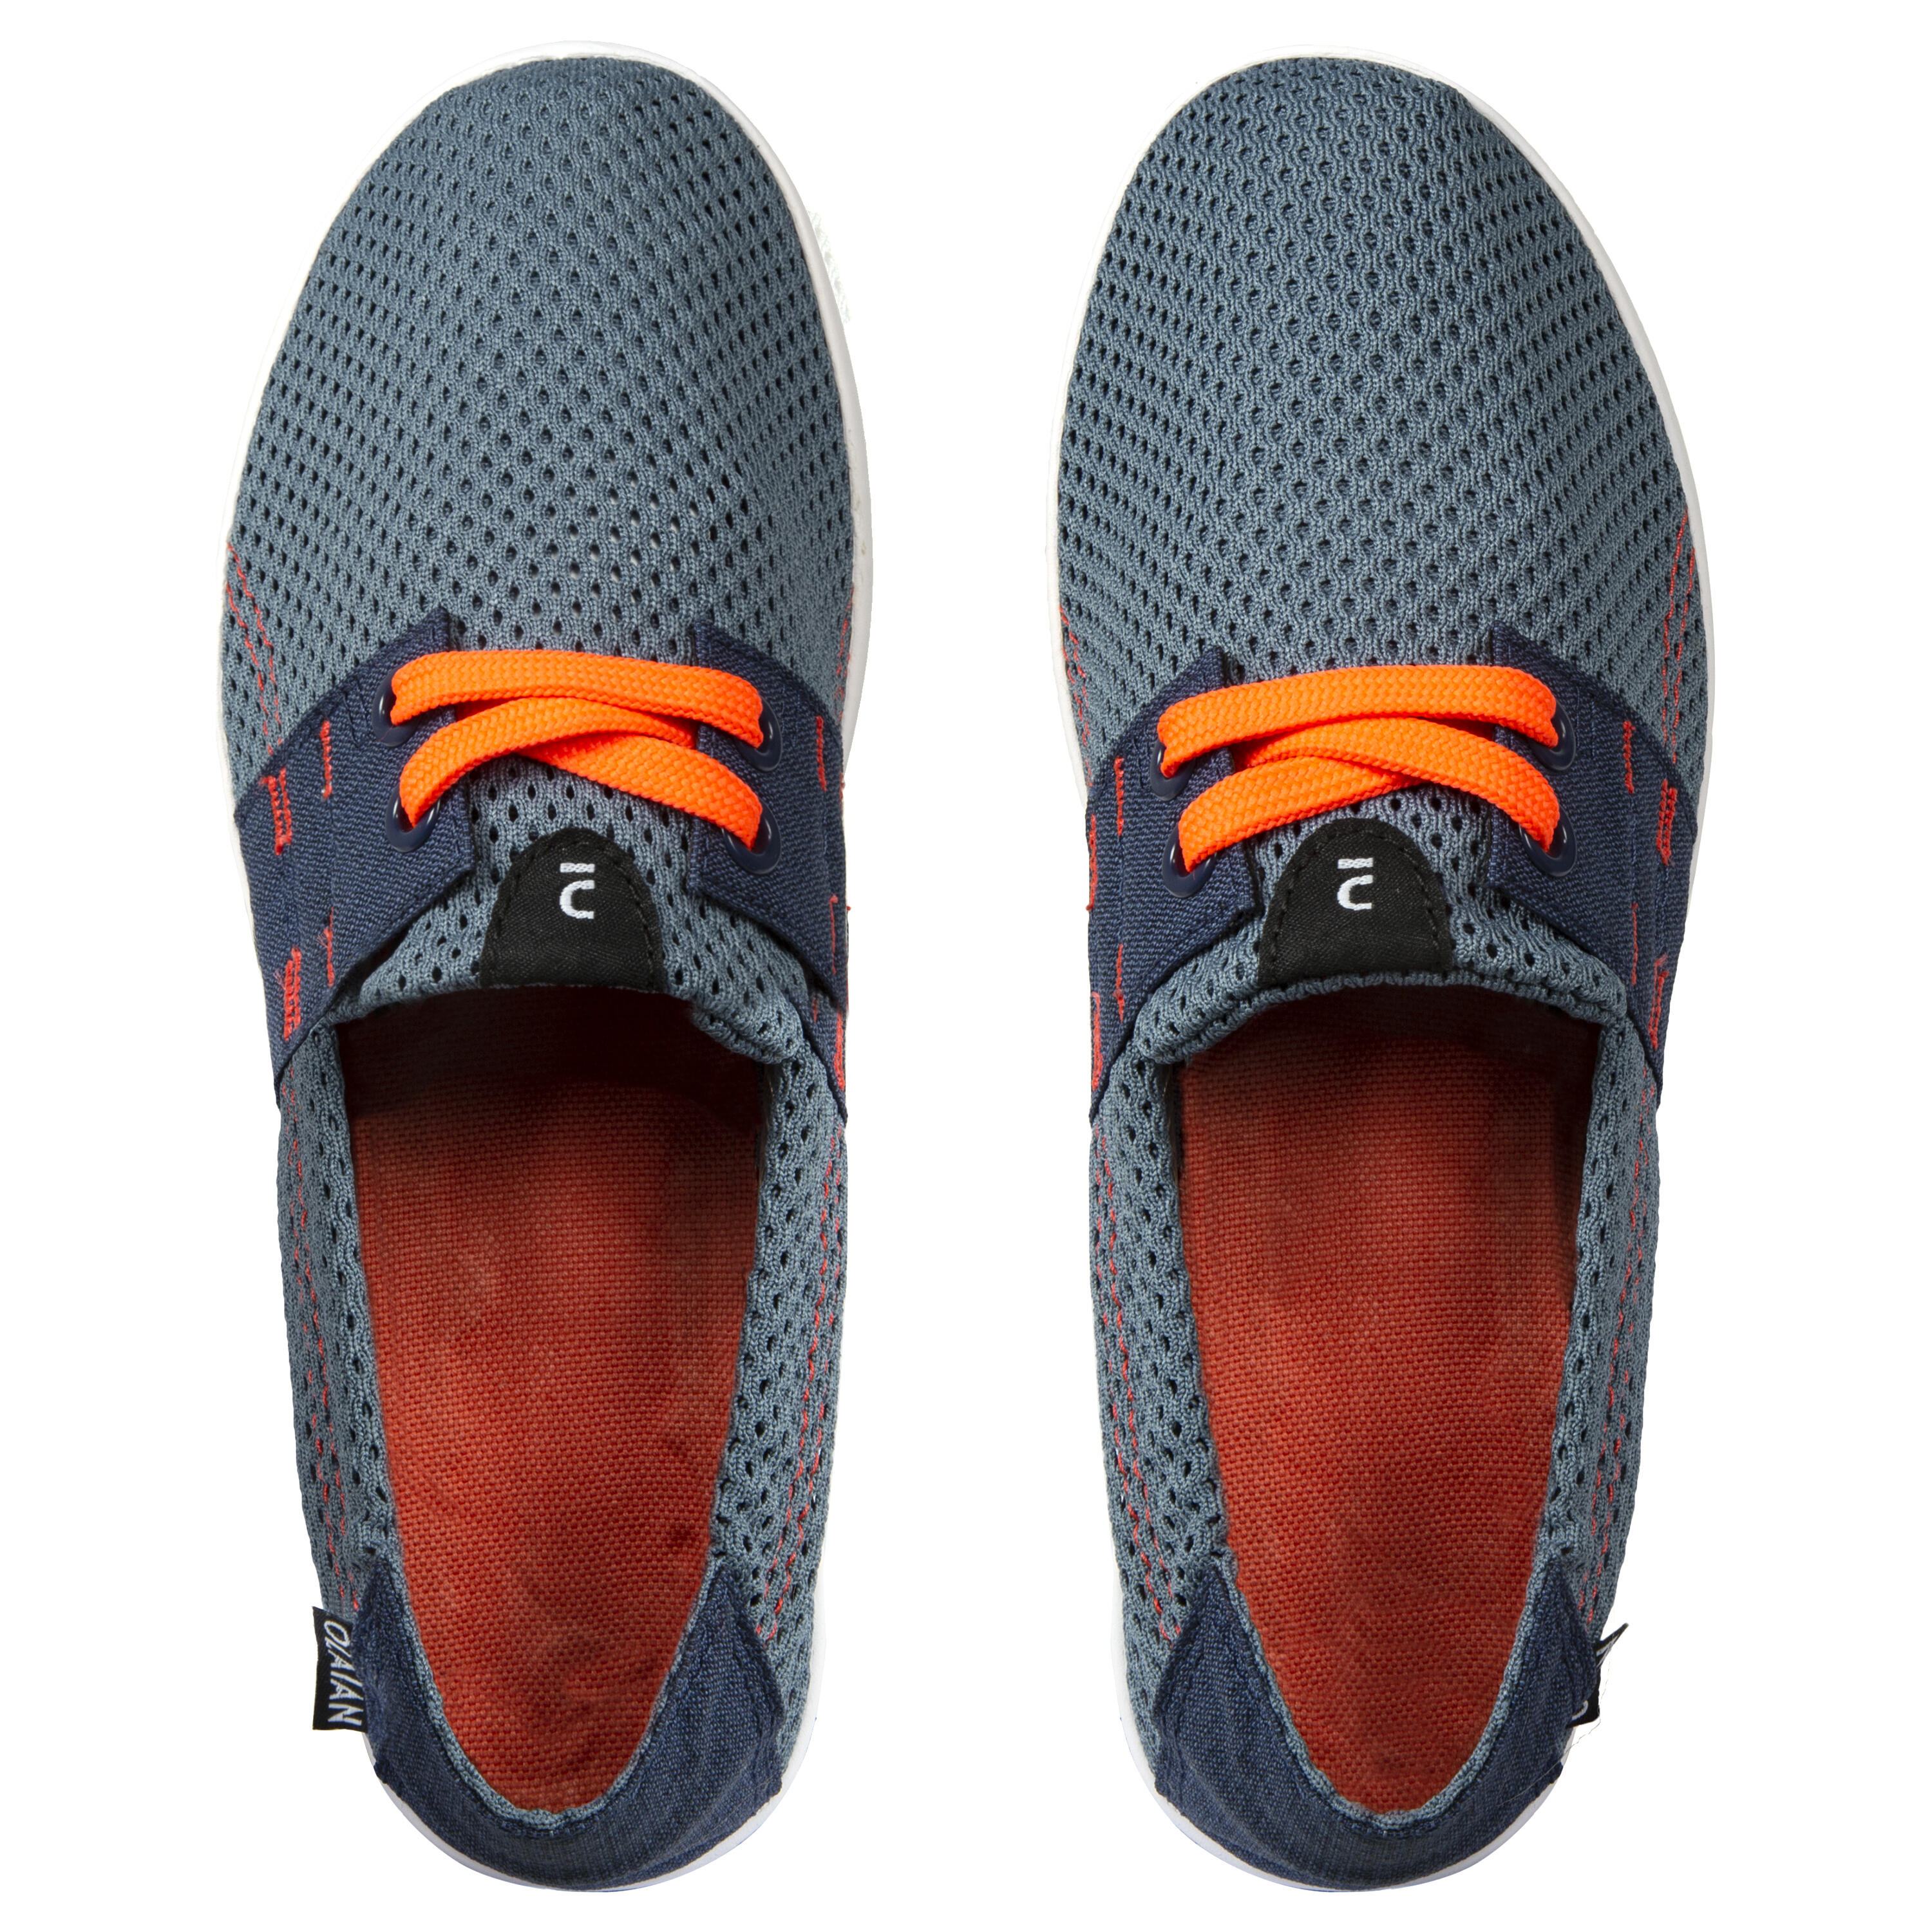 Kids shoes - Areeta blue grey 2/8